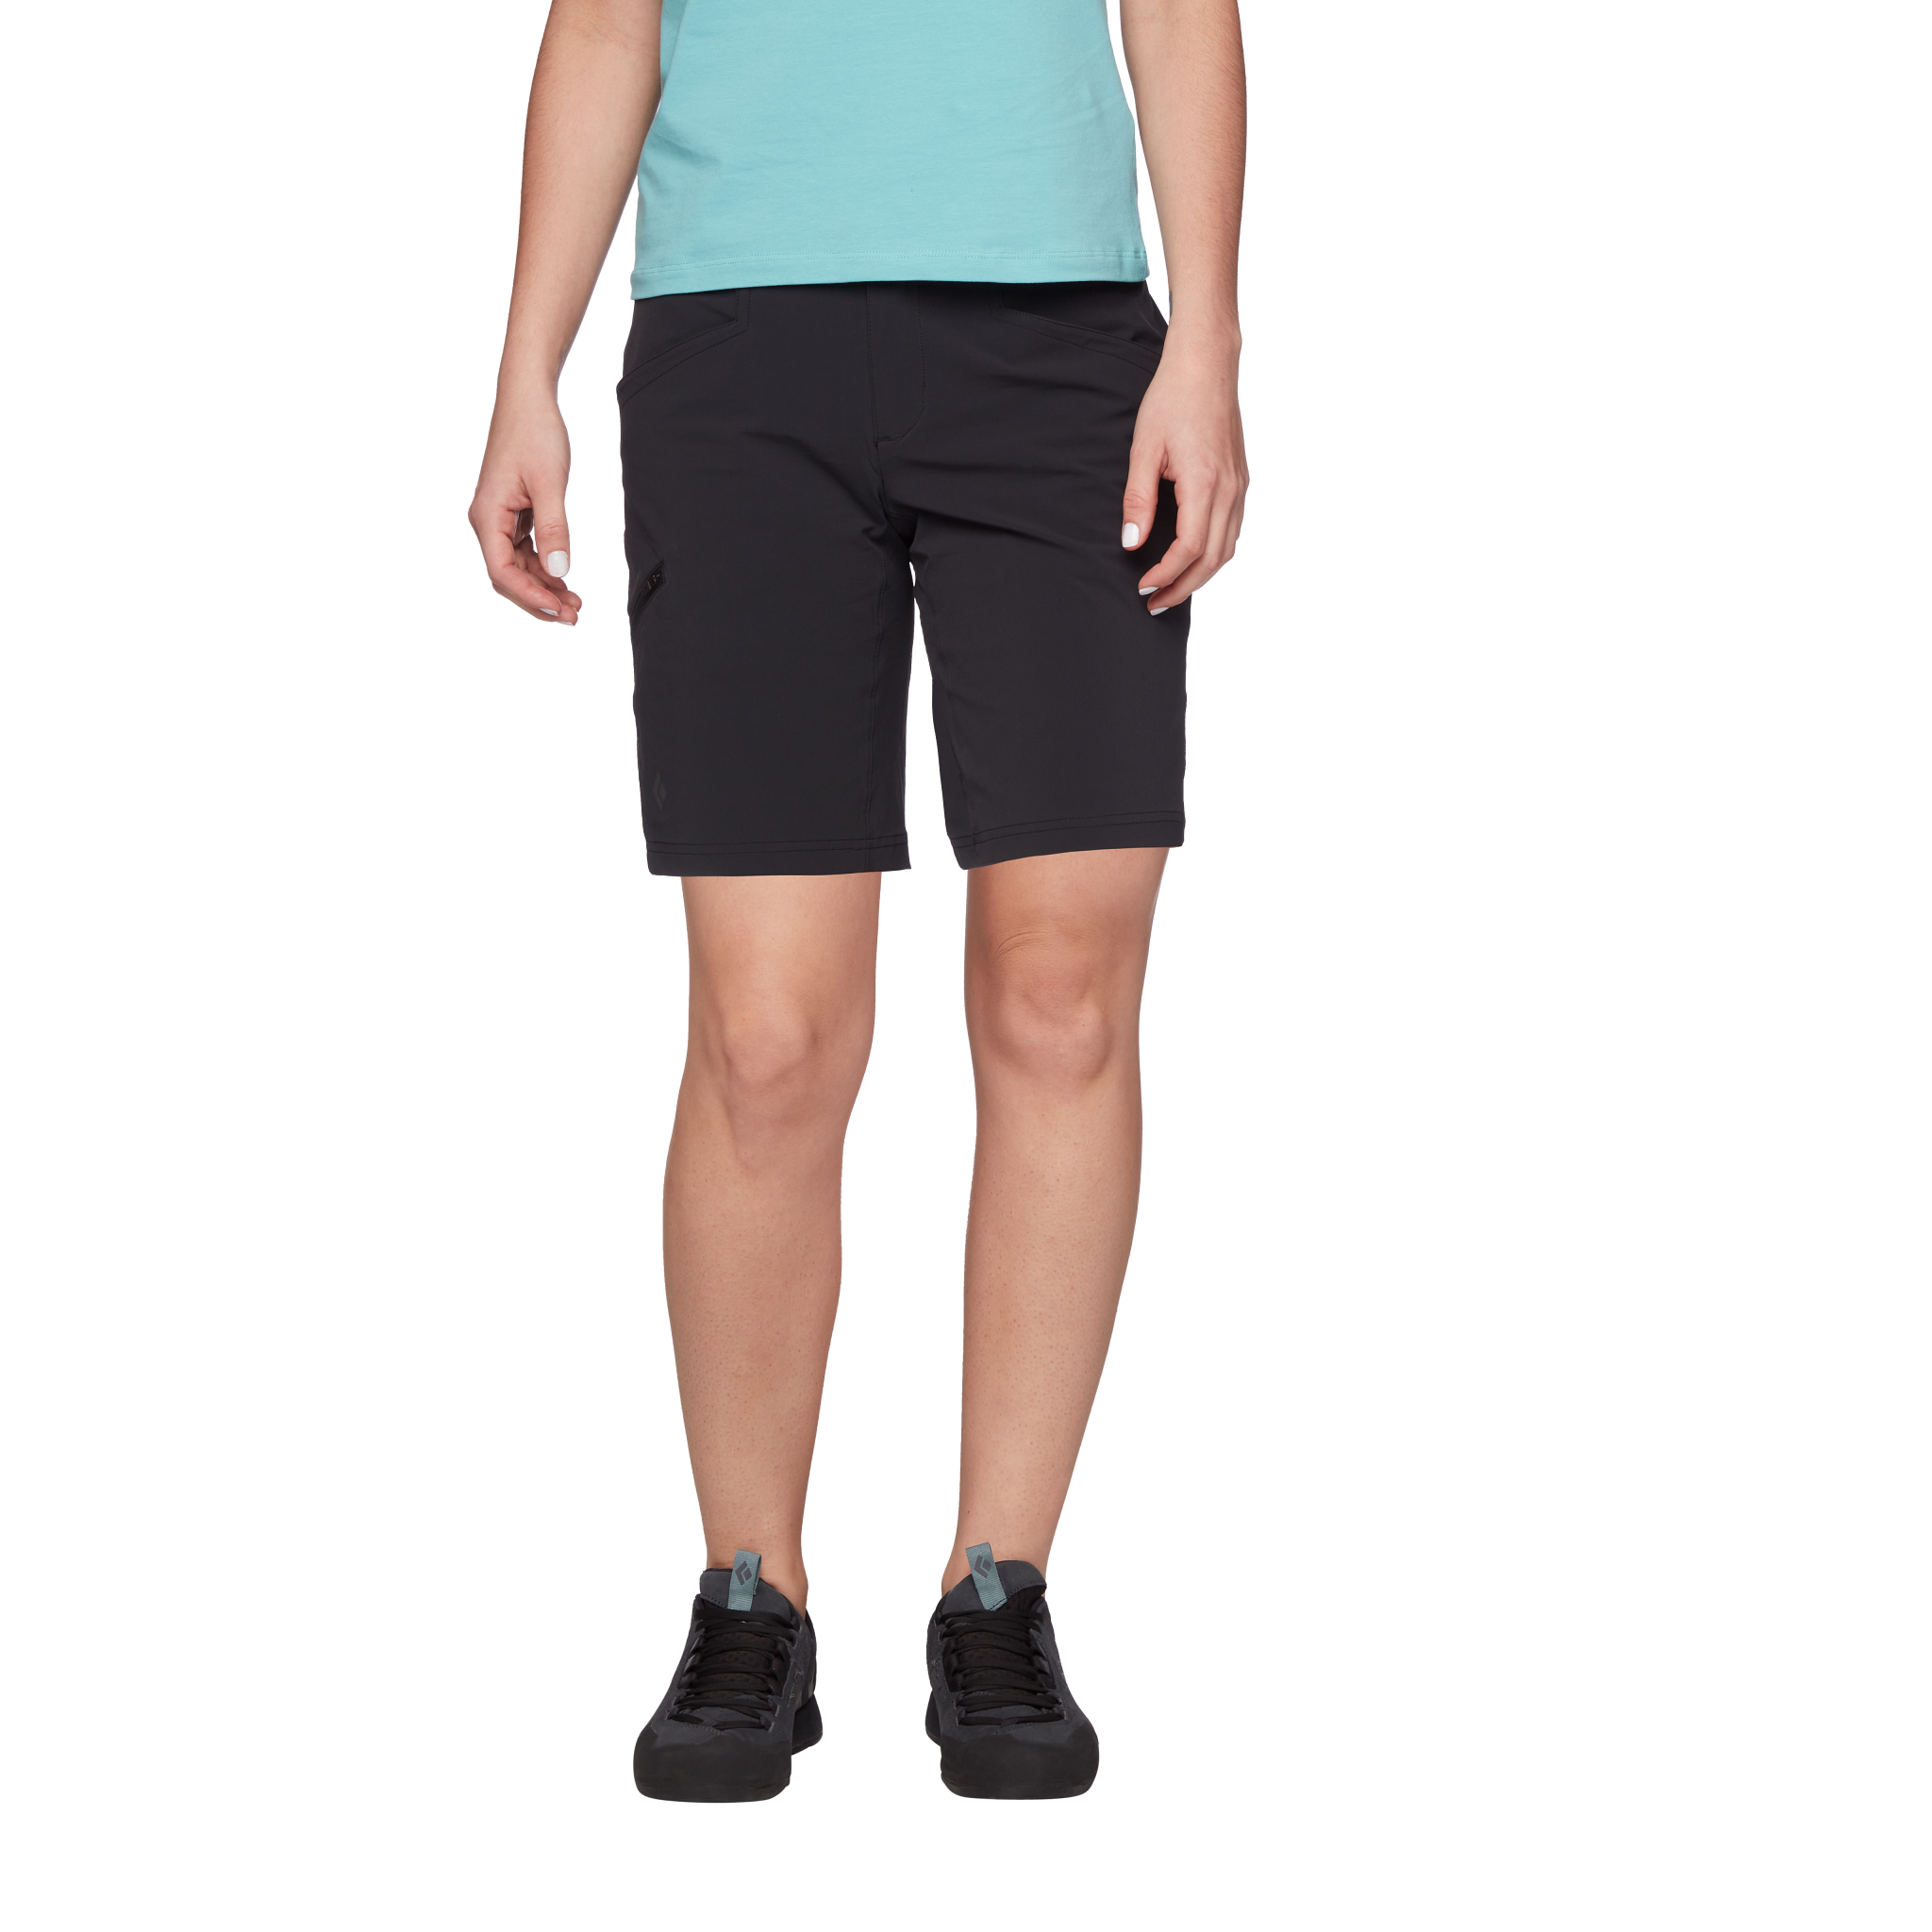 Black Diamond Equipment Women's Valley Shorts Size 10, in Black